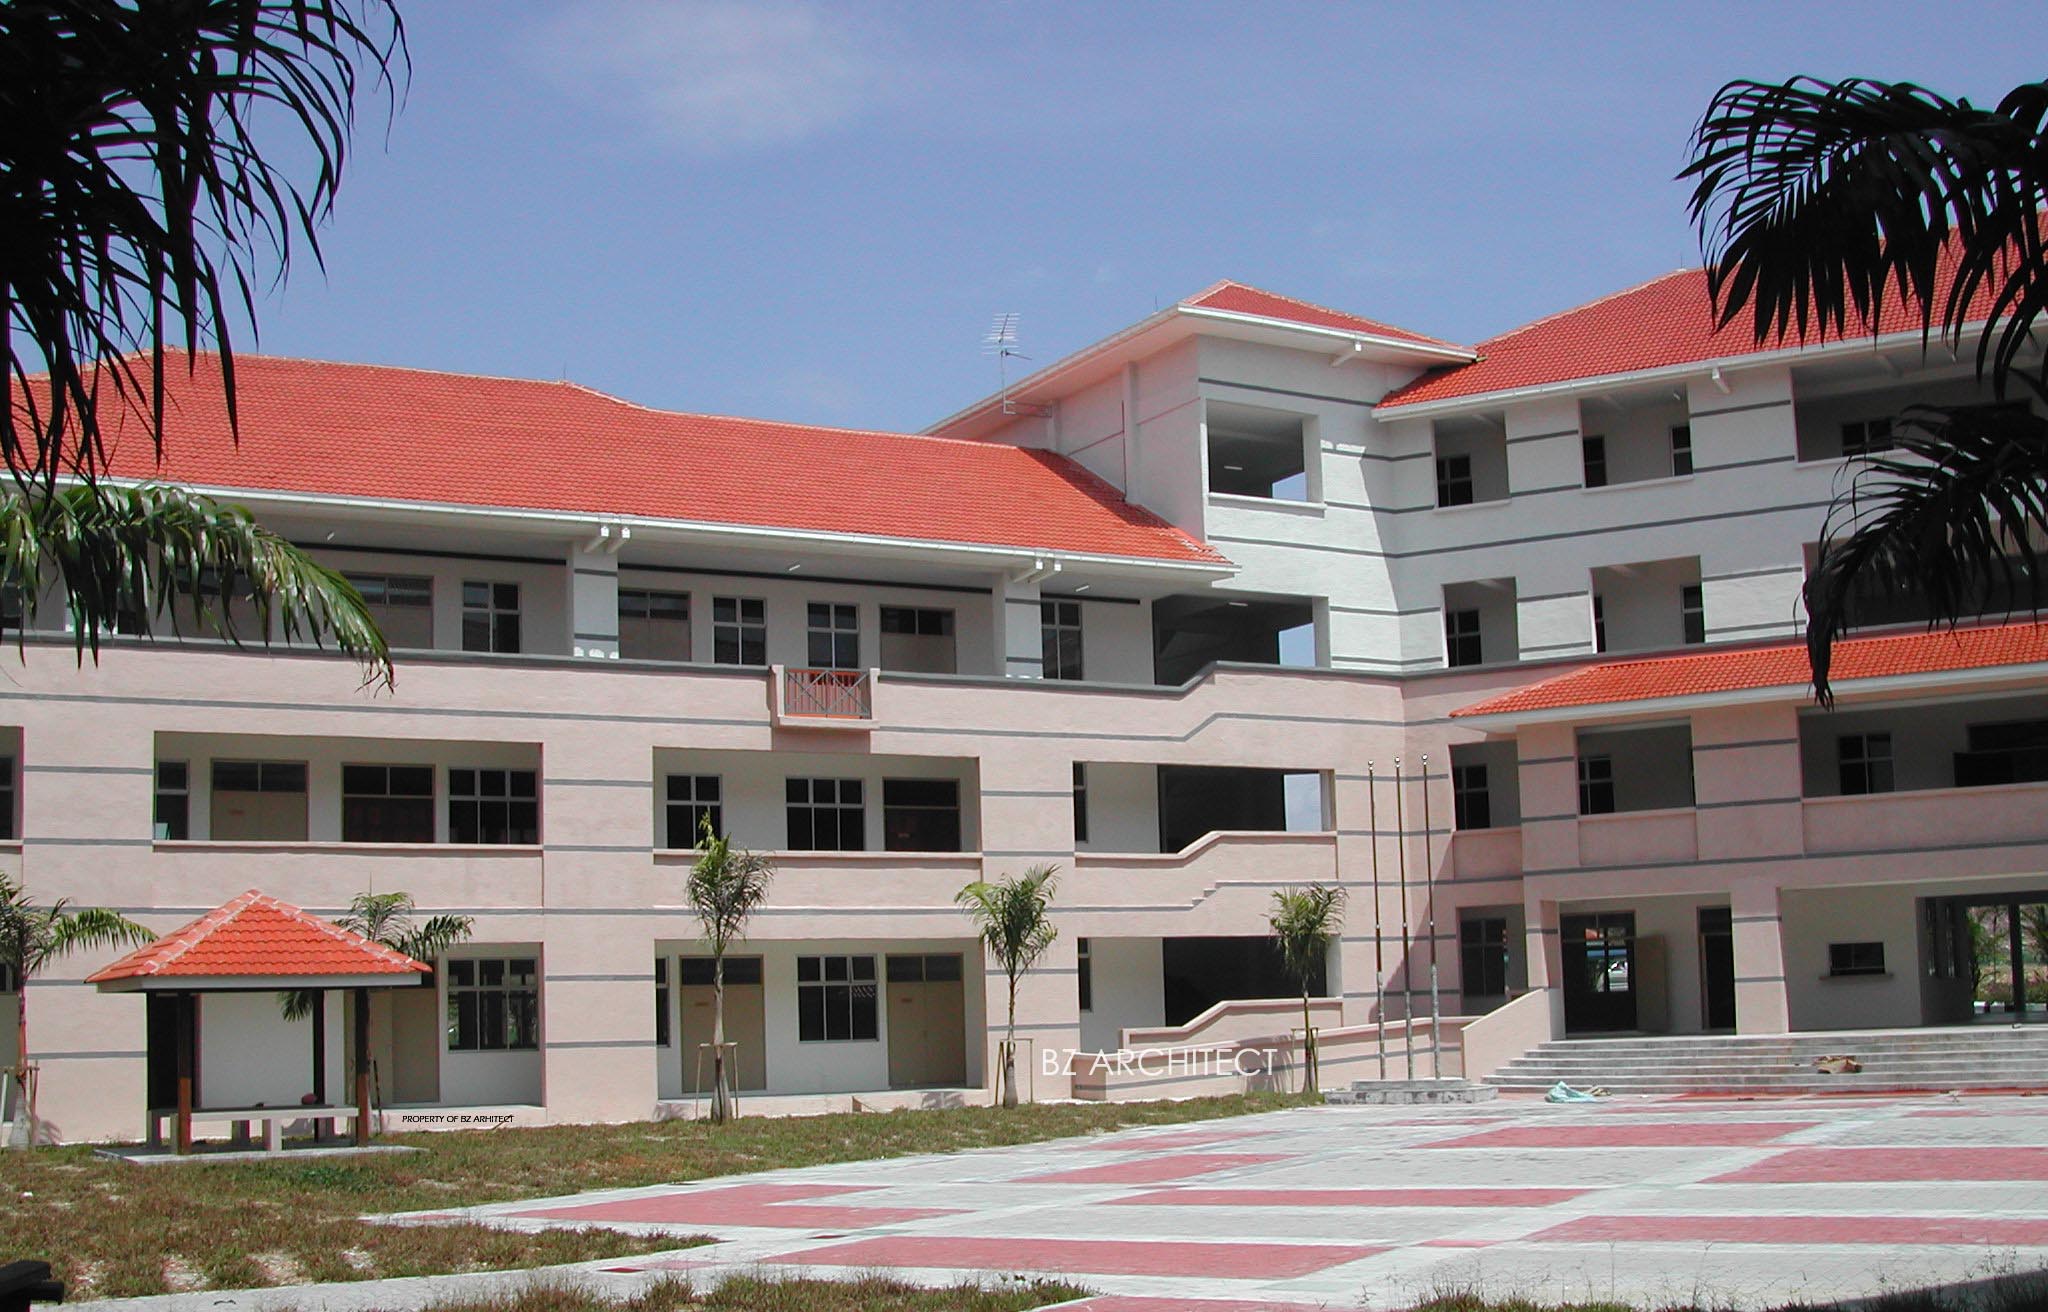 Sekolah Bukit Sentosa Bz Architect